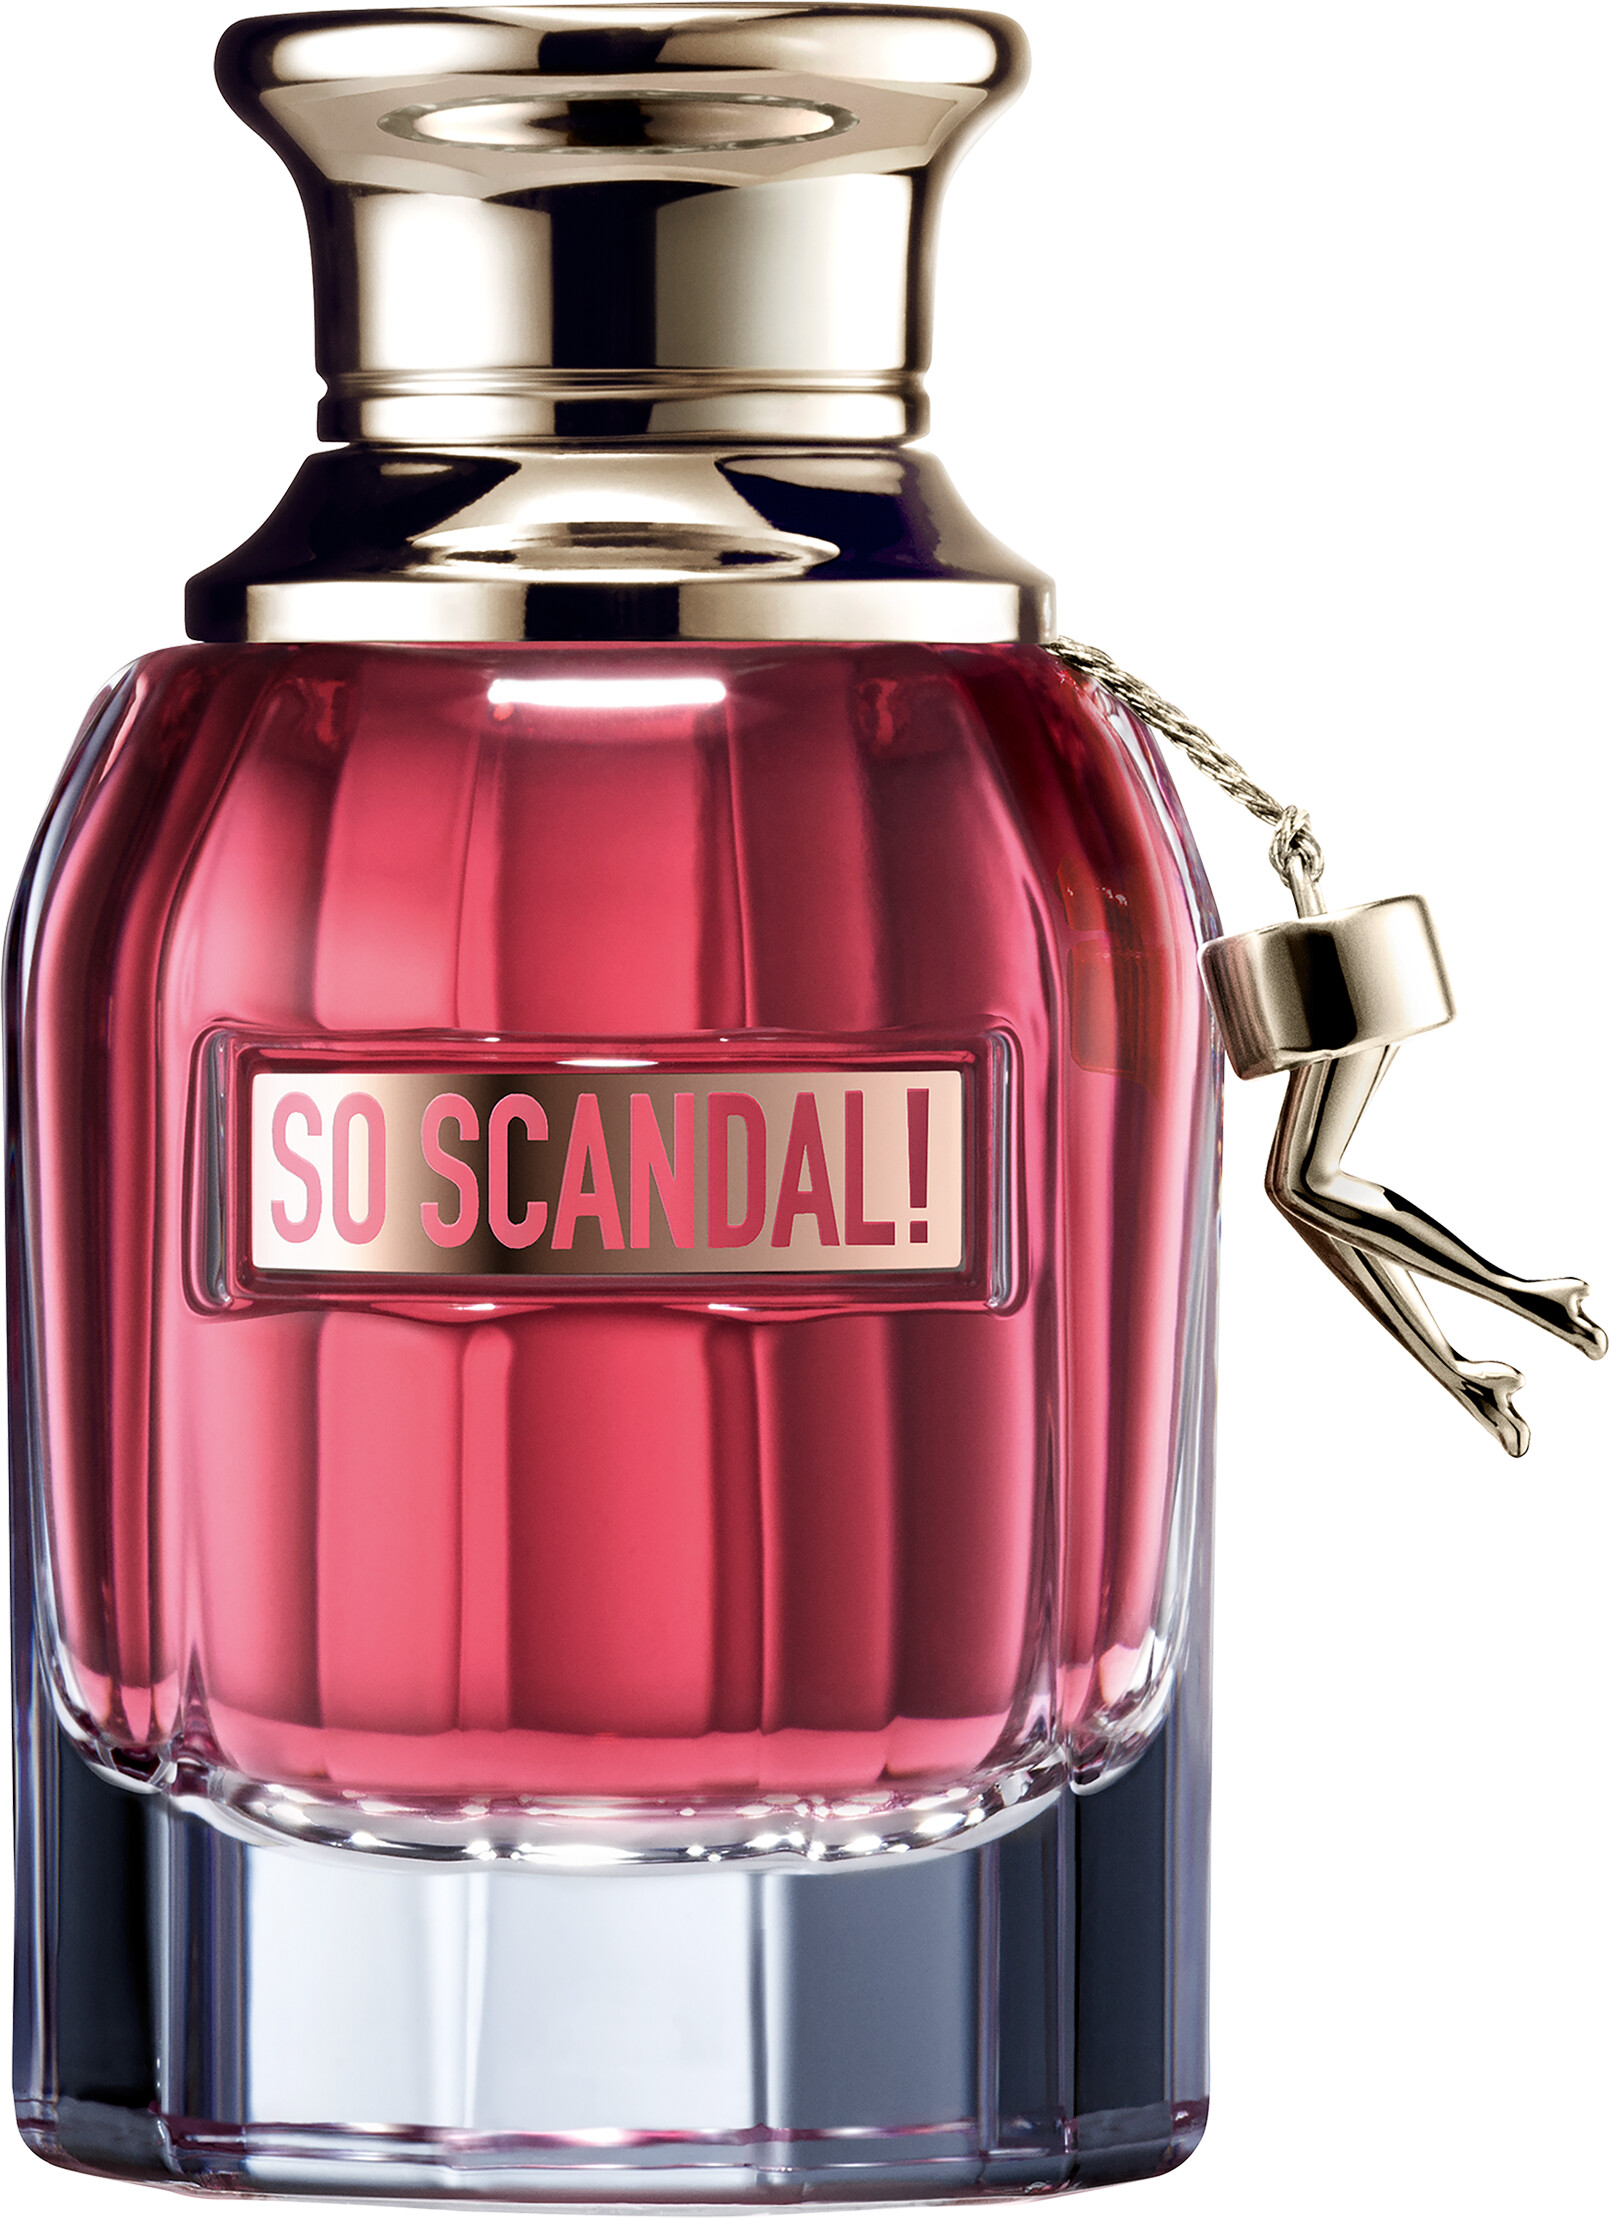 Jean Paul Gaultier So Scandal Eau de Parfum Spray 30ml